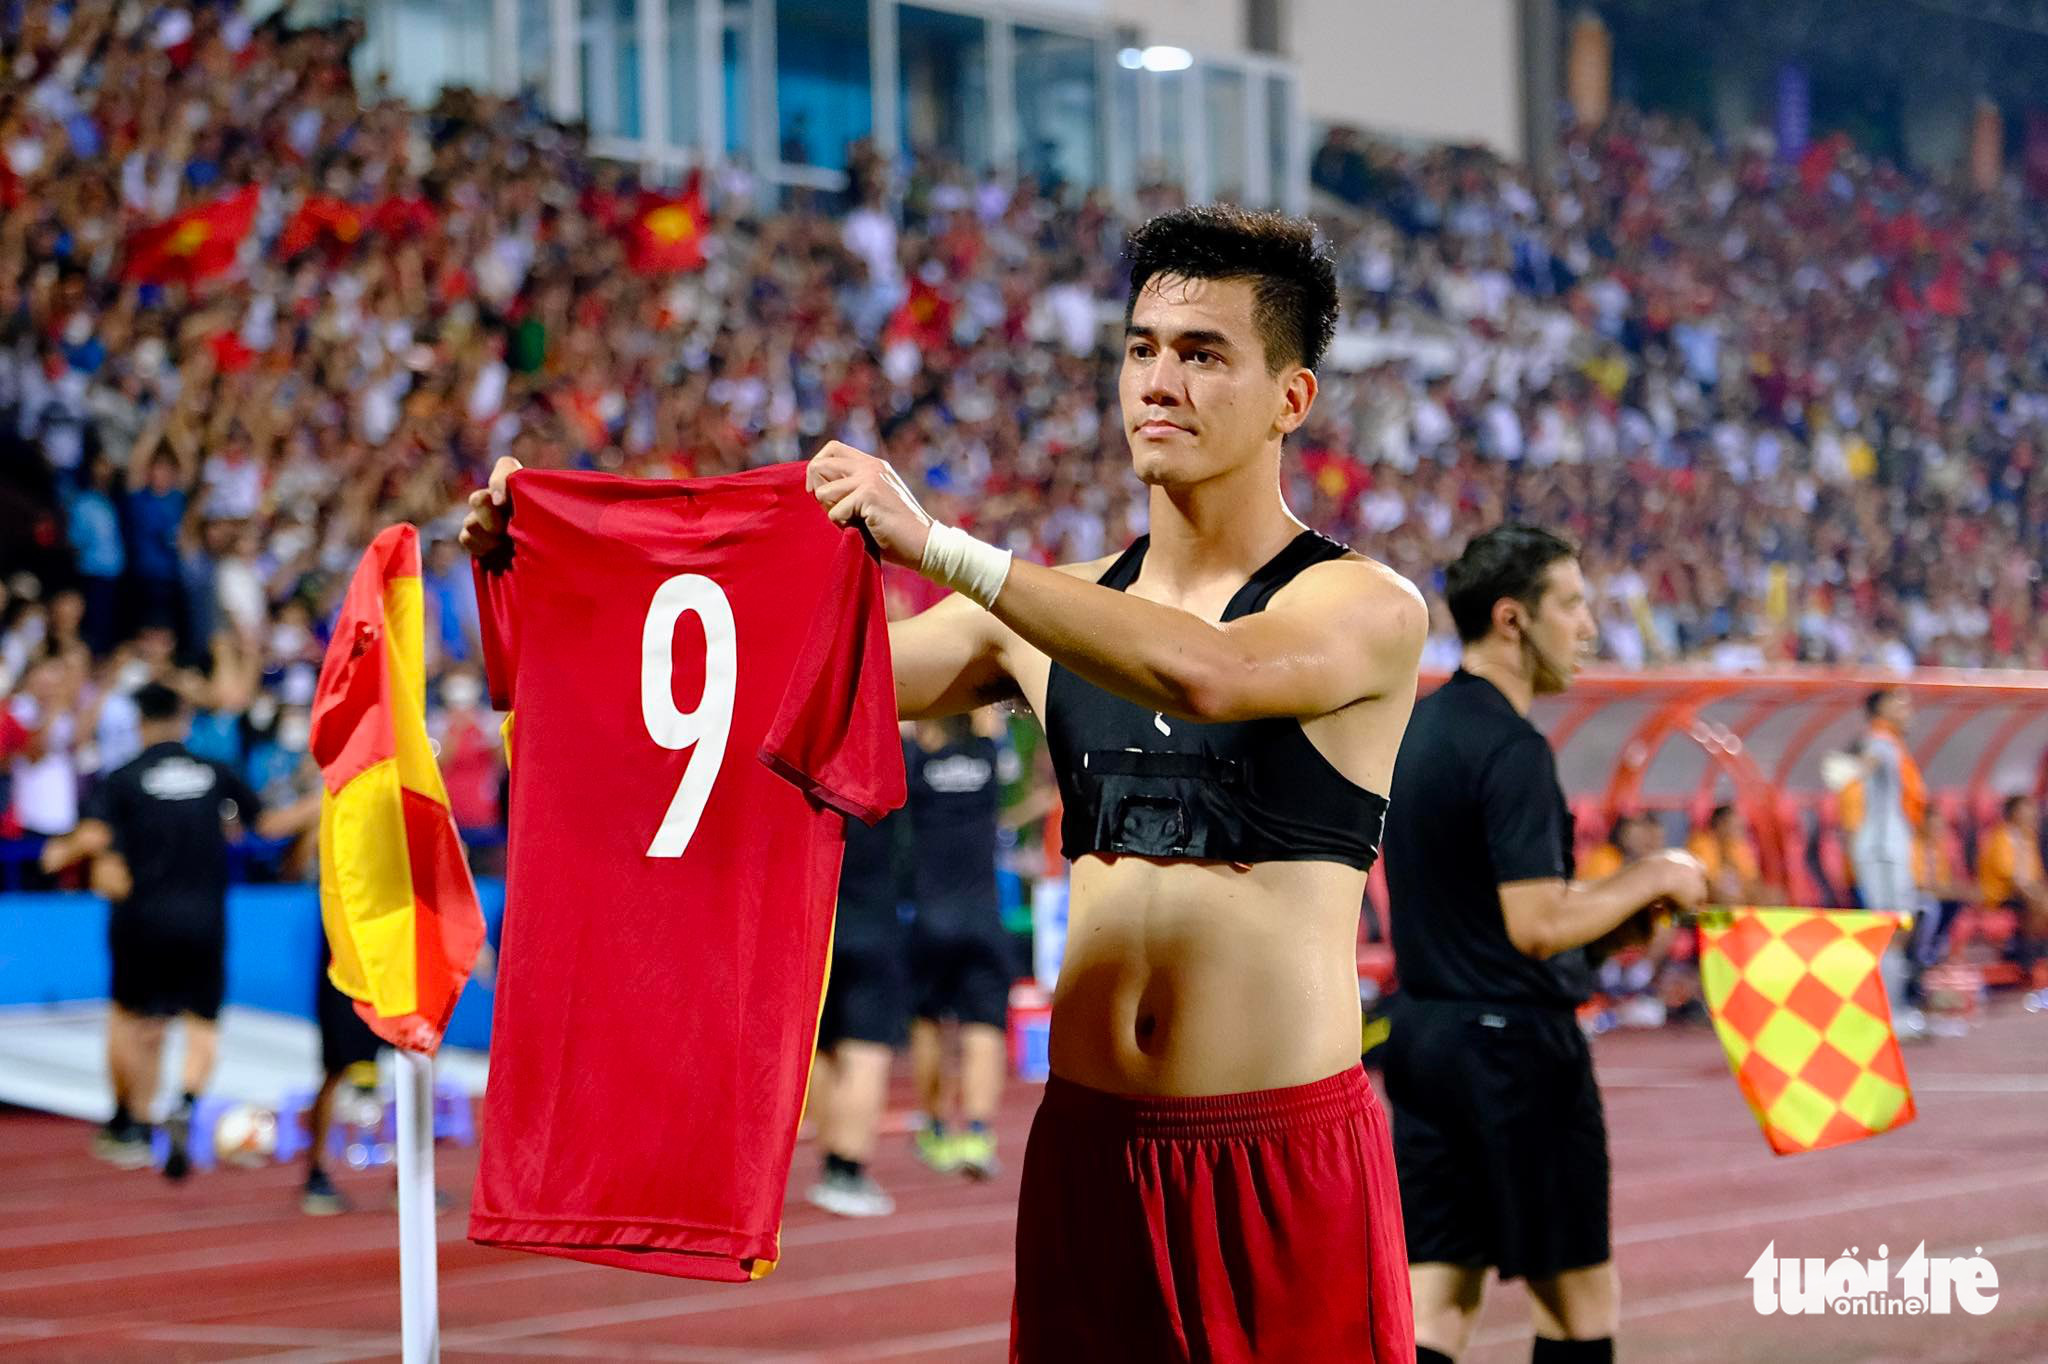 Vietnamese striker's bra-like vest during SEA Games semifinal